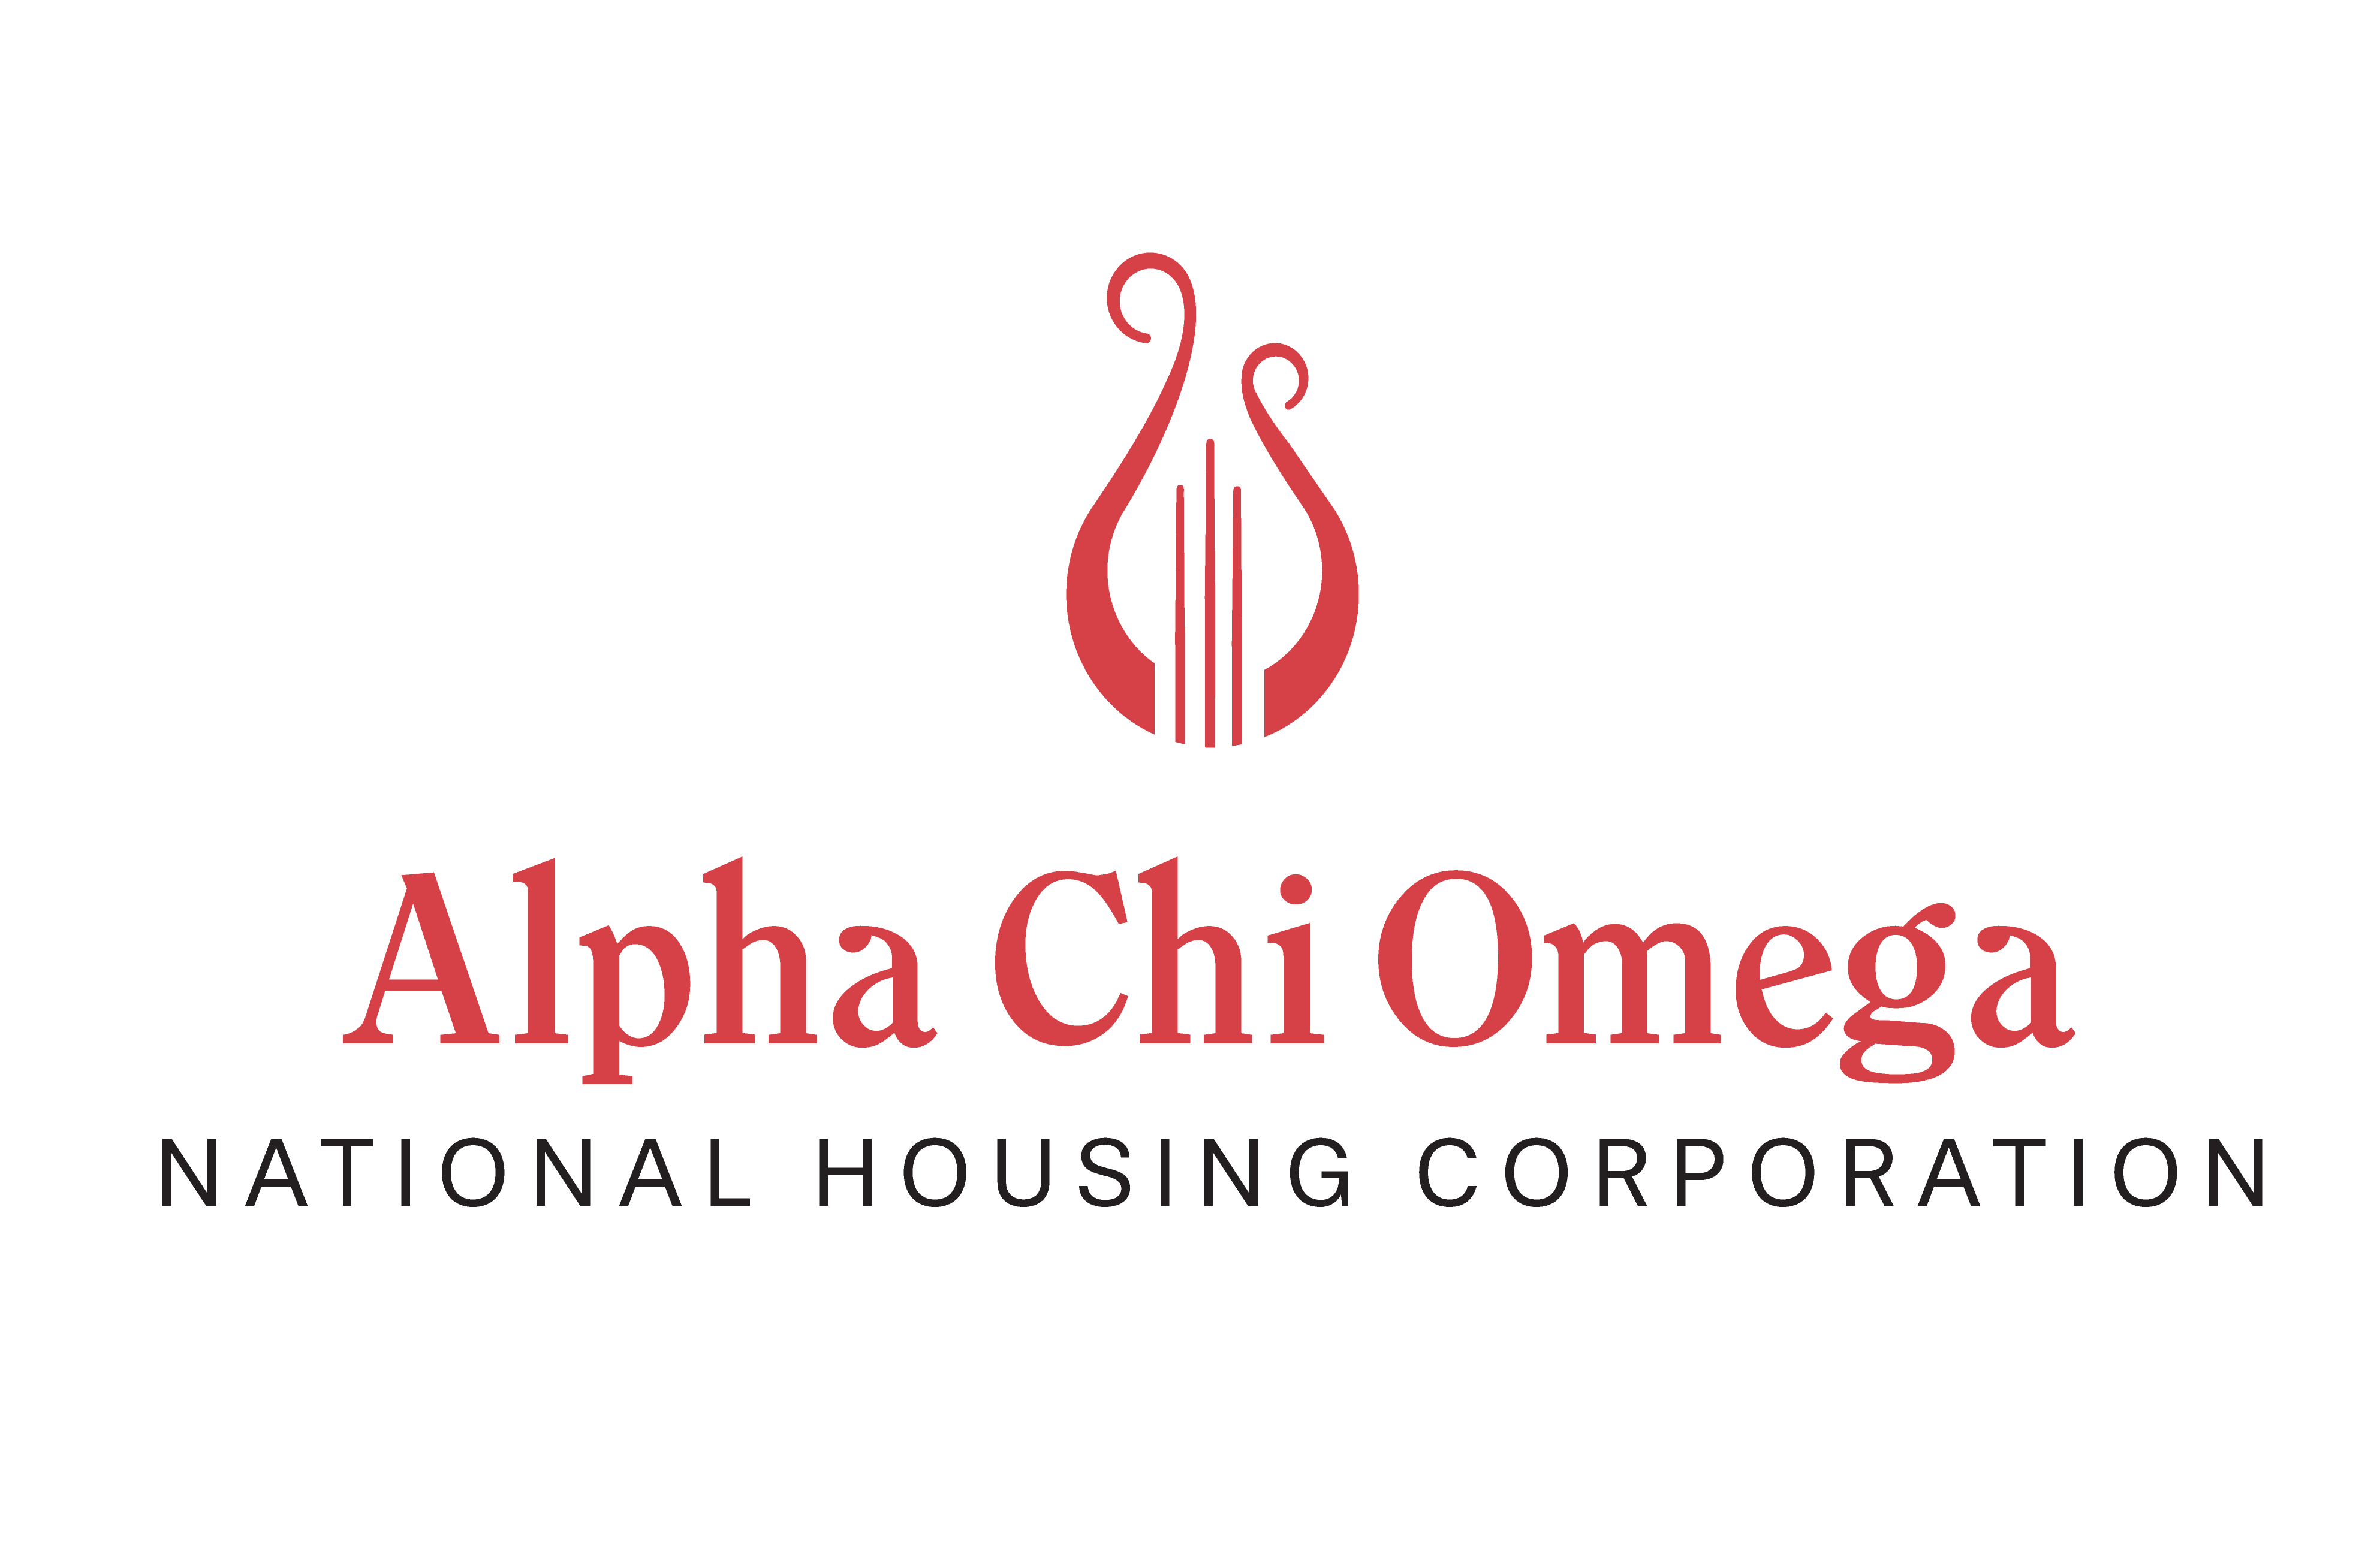 National Housing Corporation logo